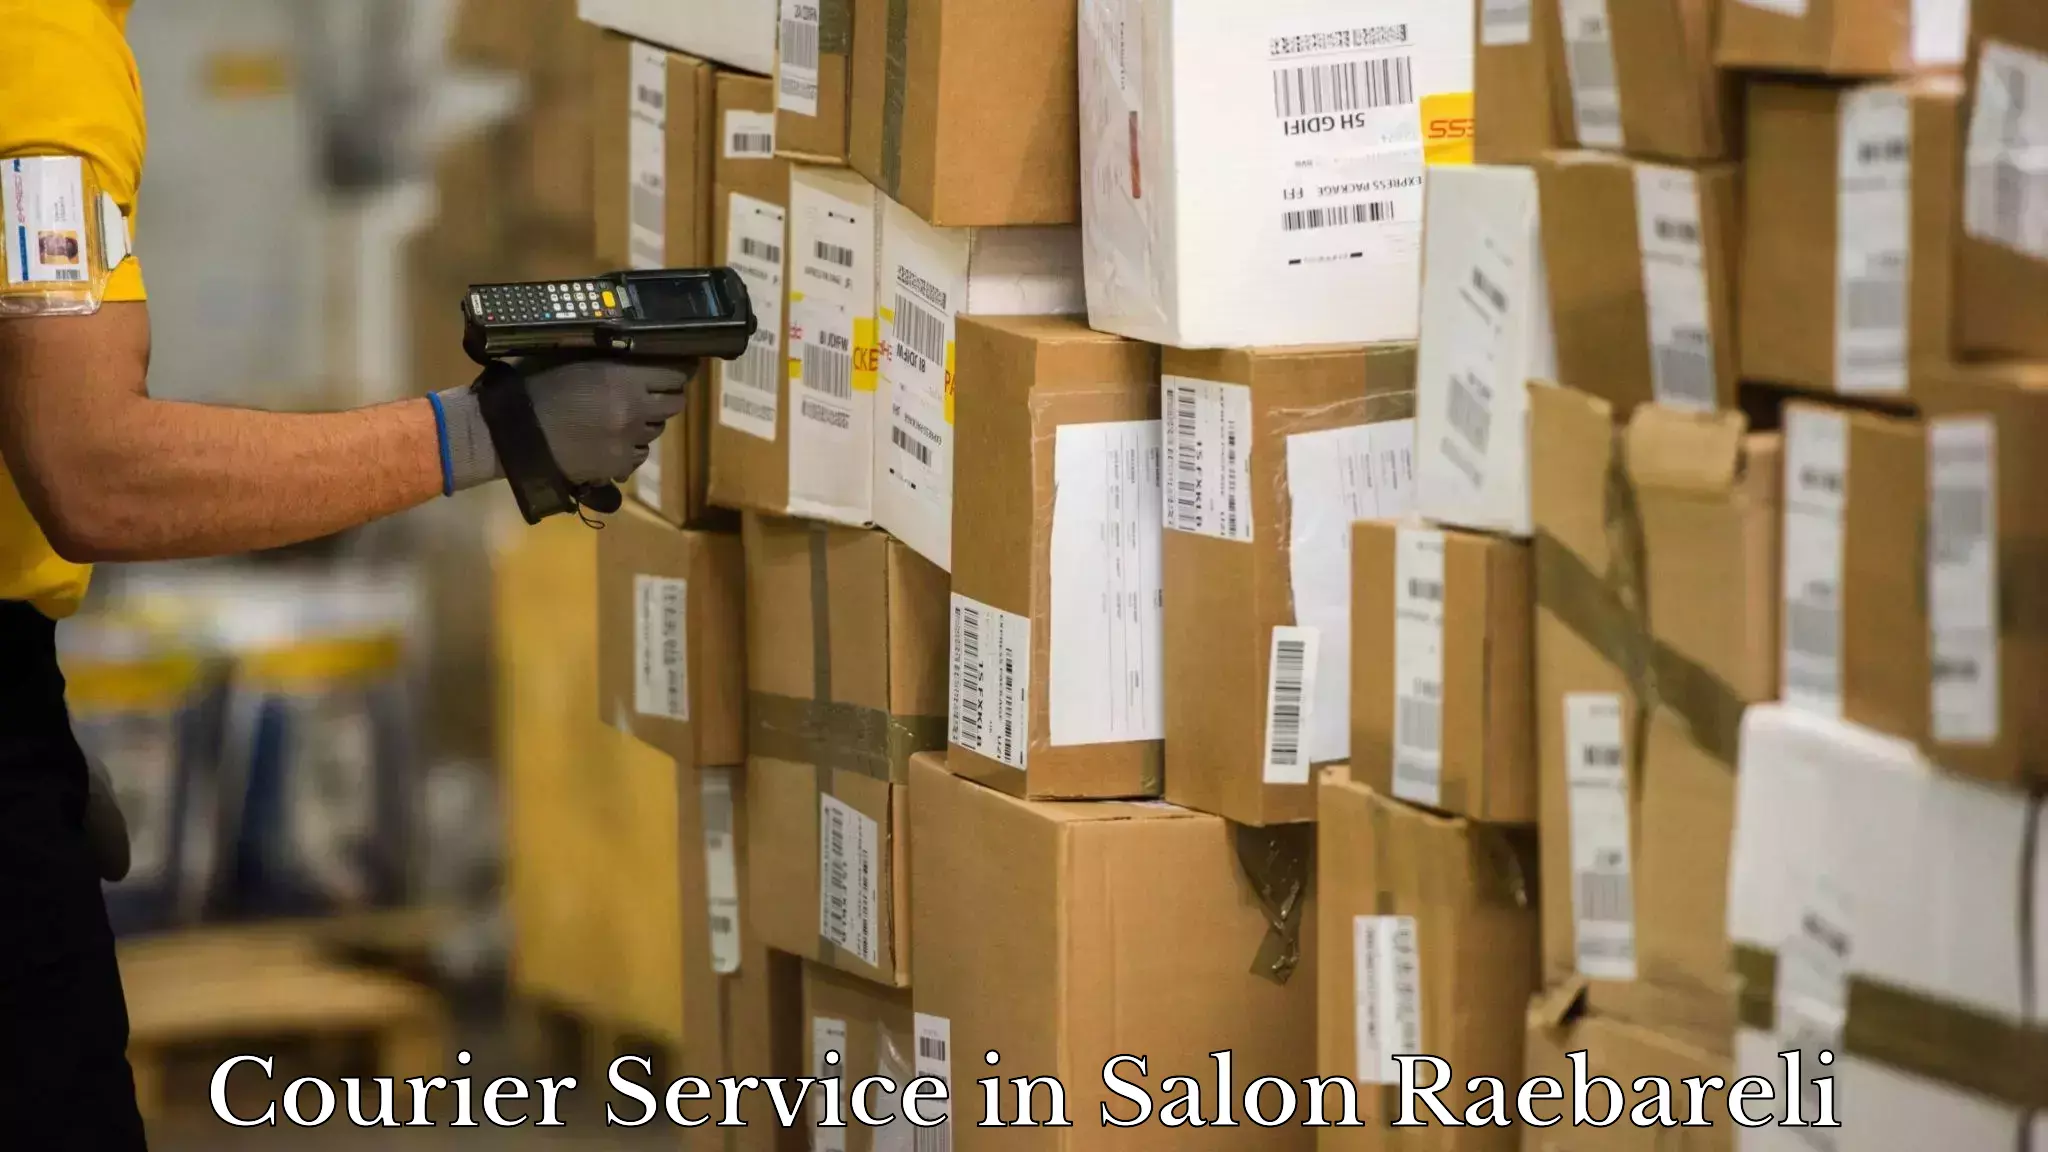 Effective logistics strategies in Salon Raebareli